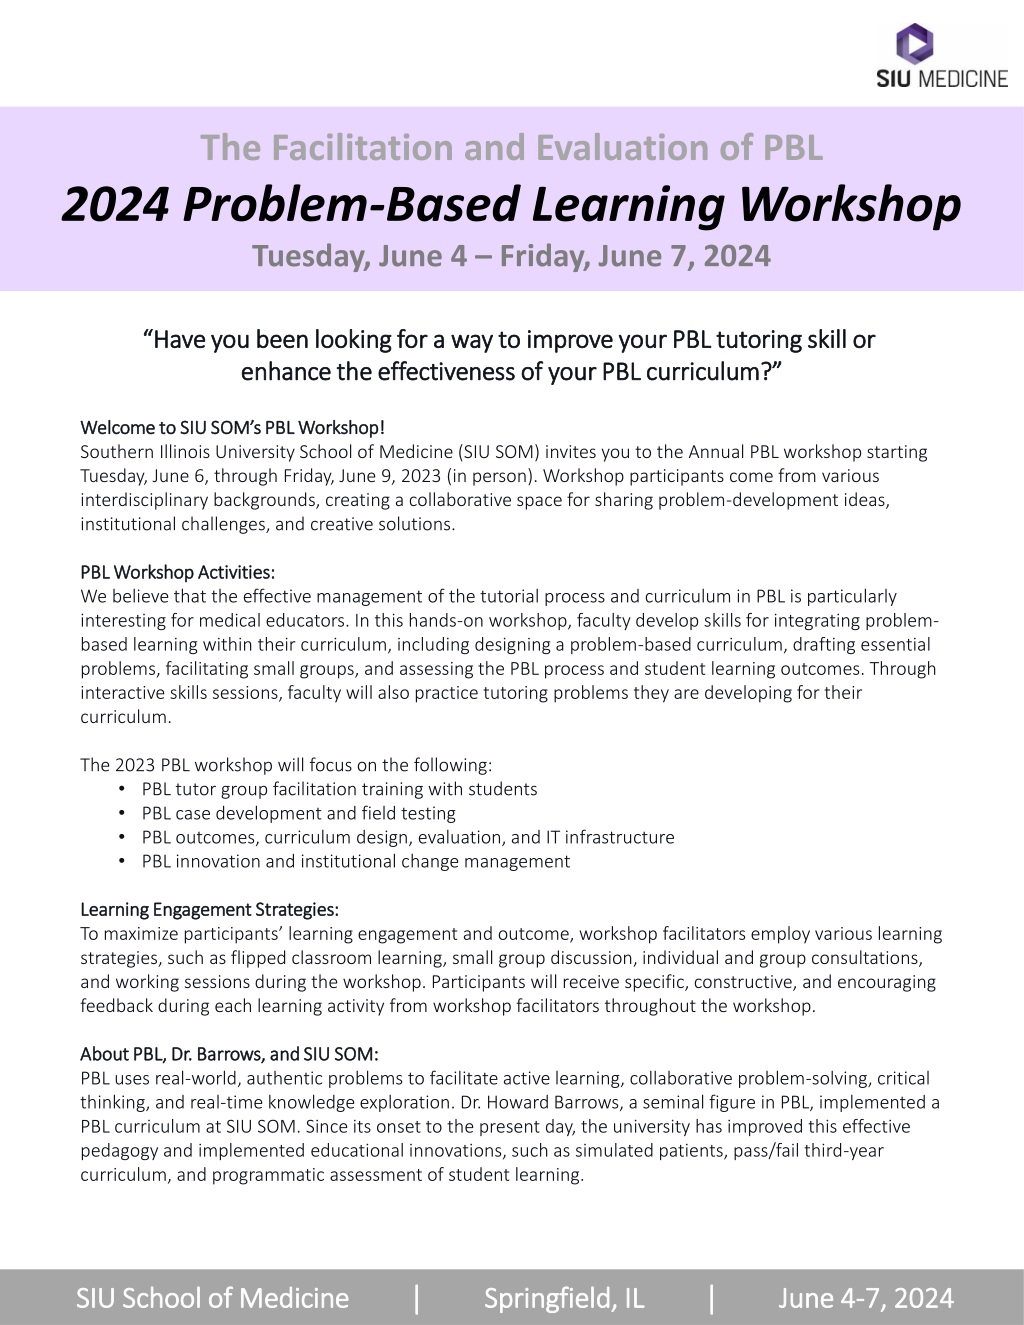 Enhancing PBL Skills: SIU SOM's Problem-Based Learning Workshop 2024